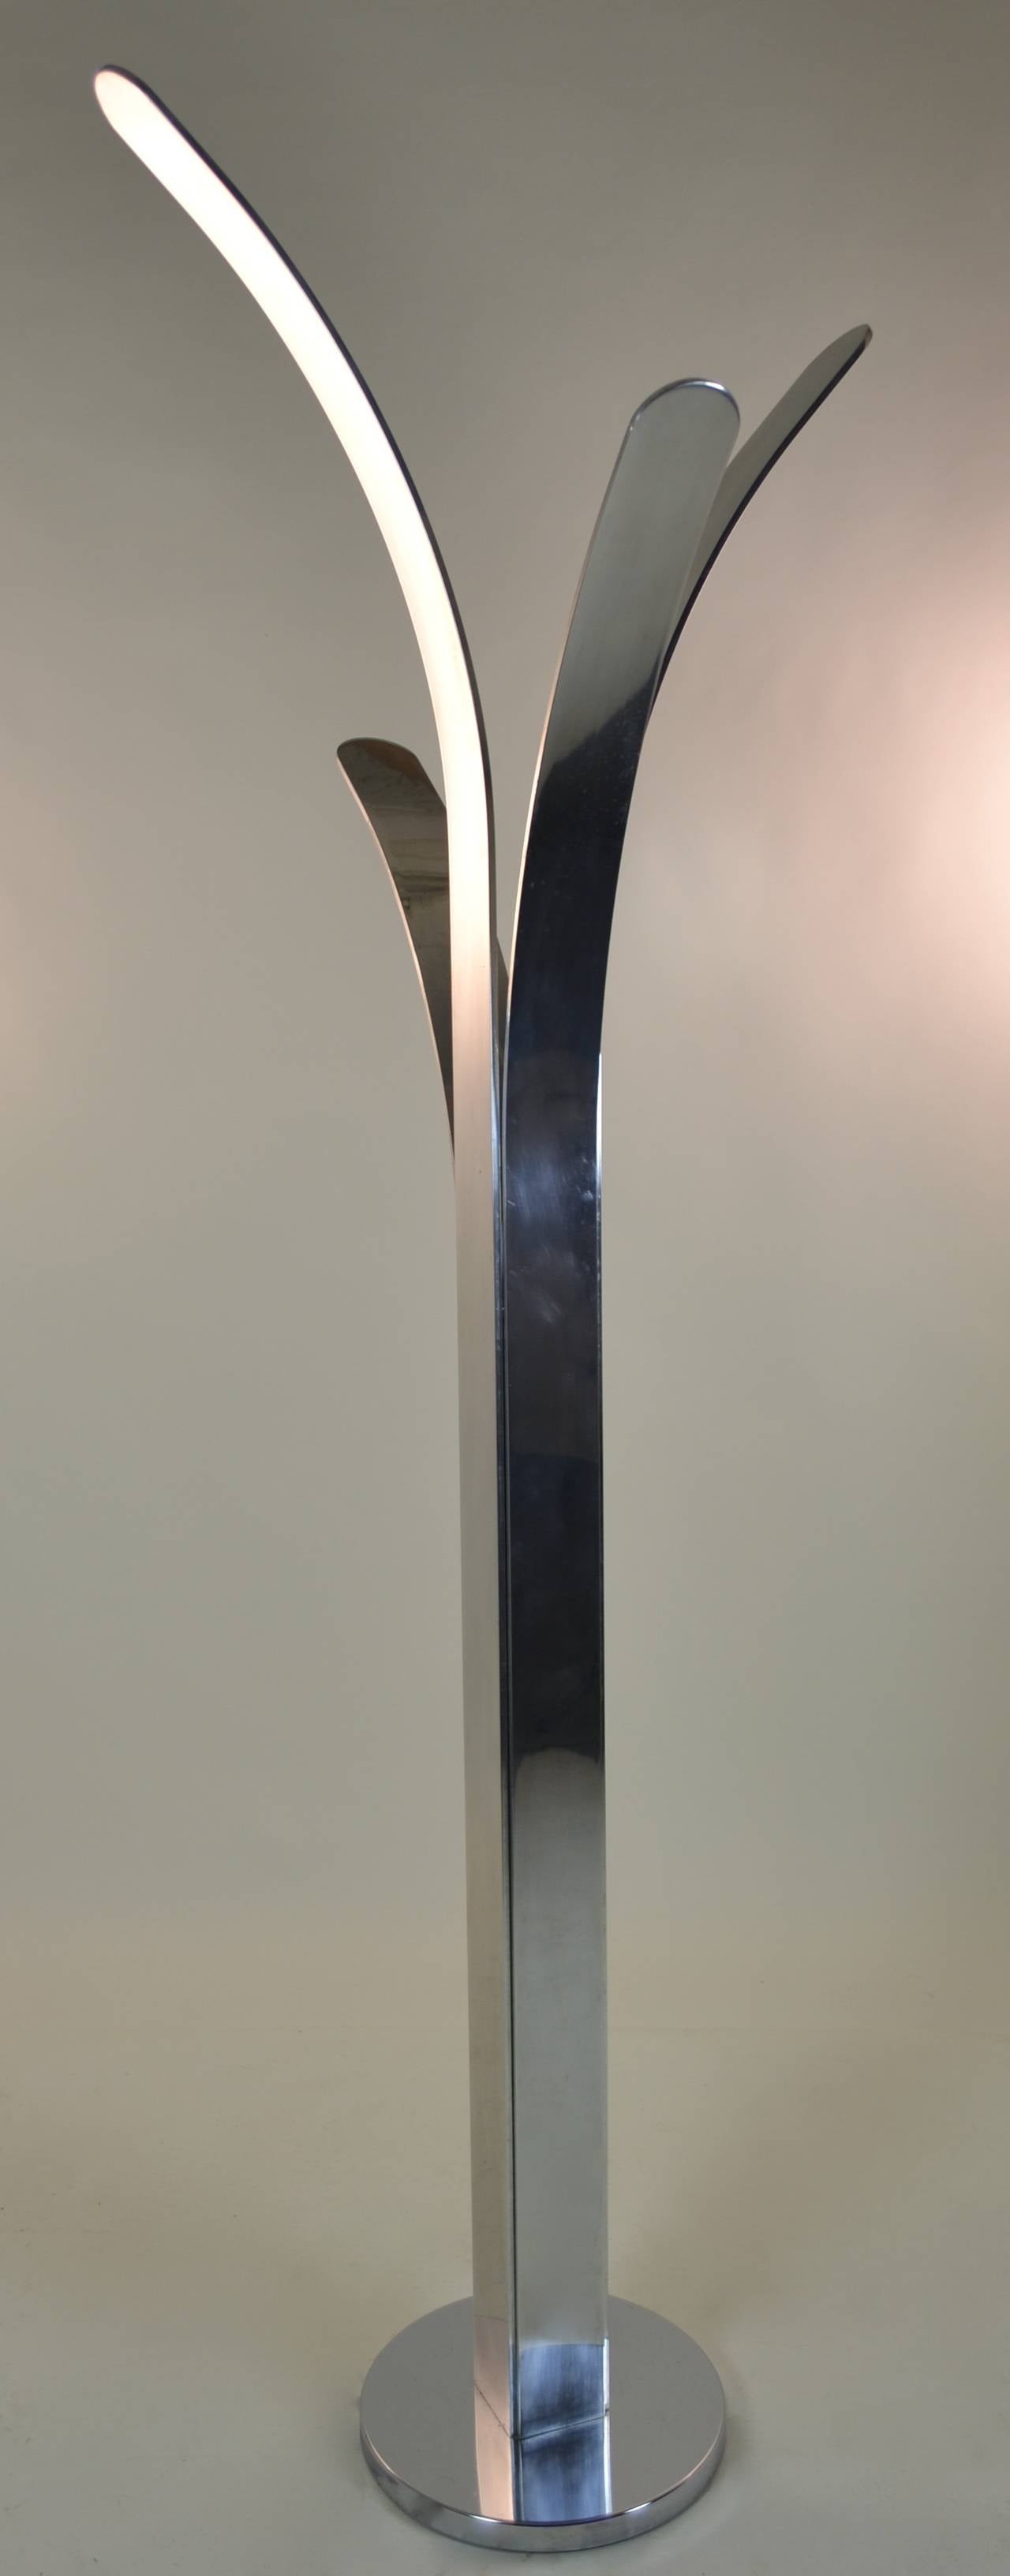 Late 20th Century Six-Foot Aluminum Sculpture